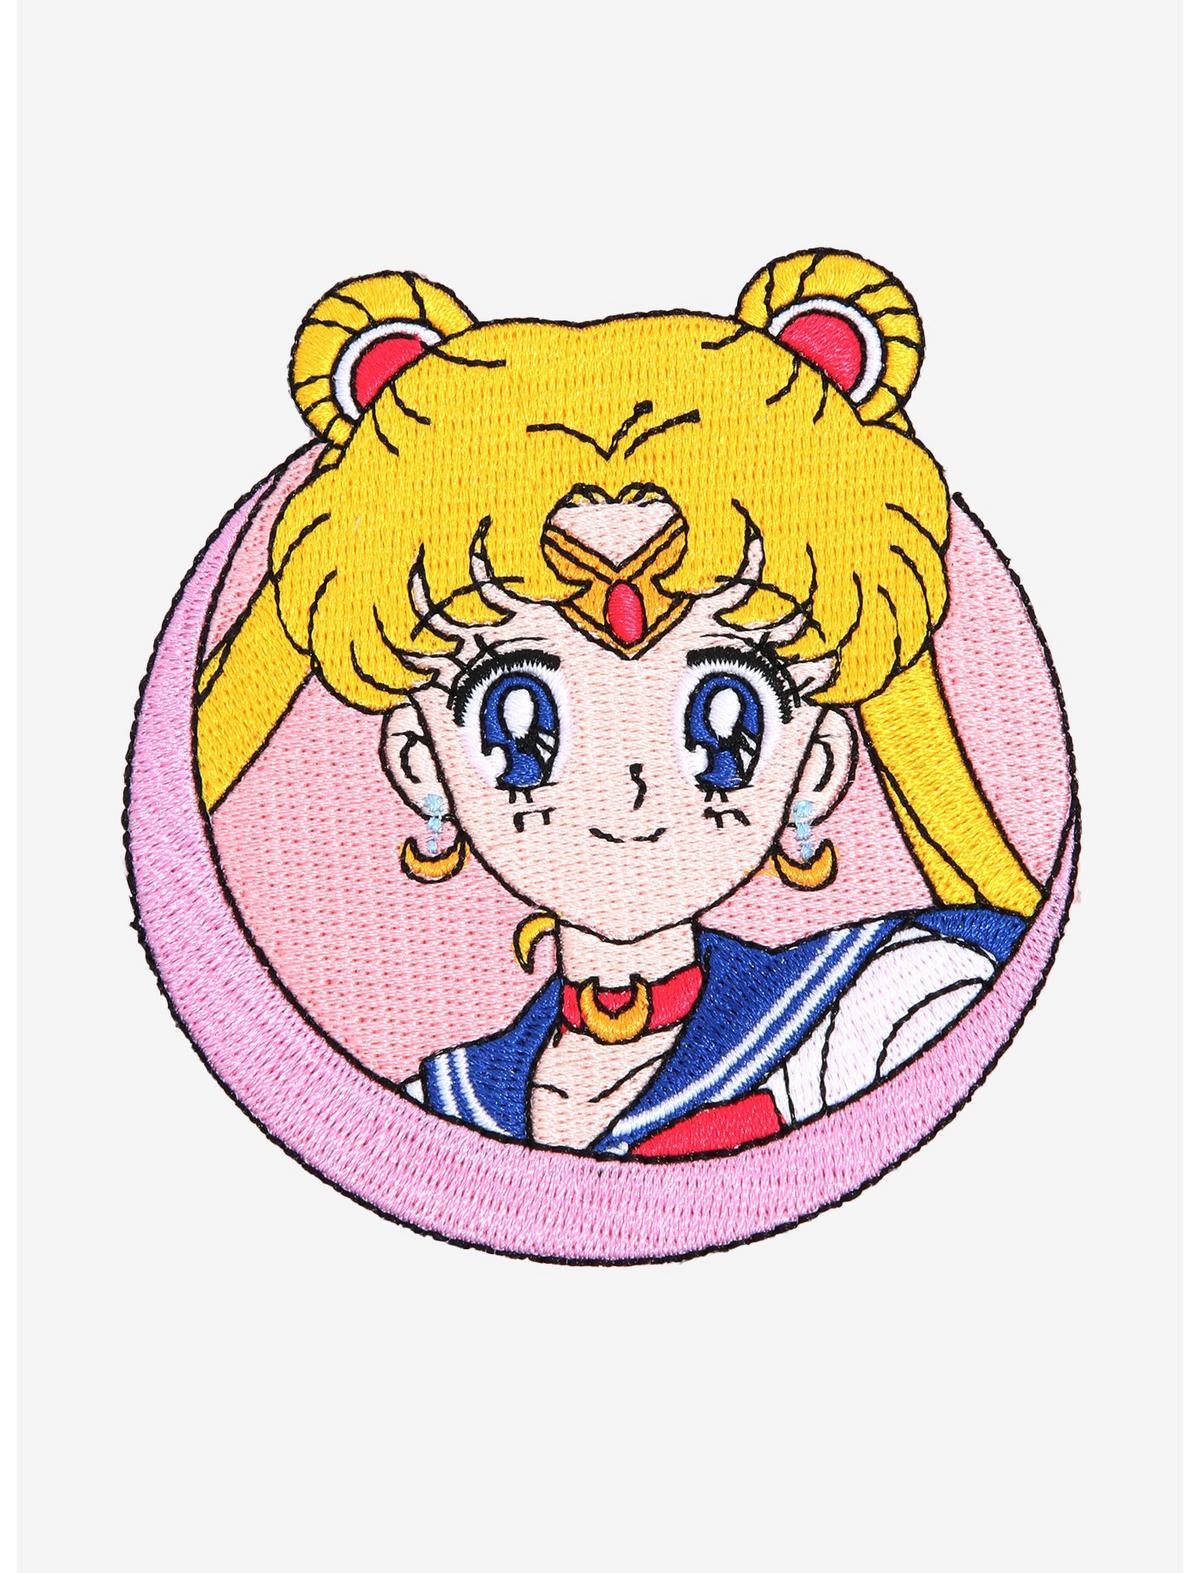 Sailor moon smiling